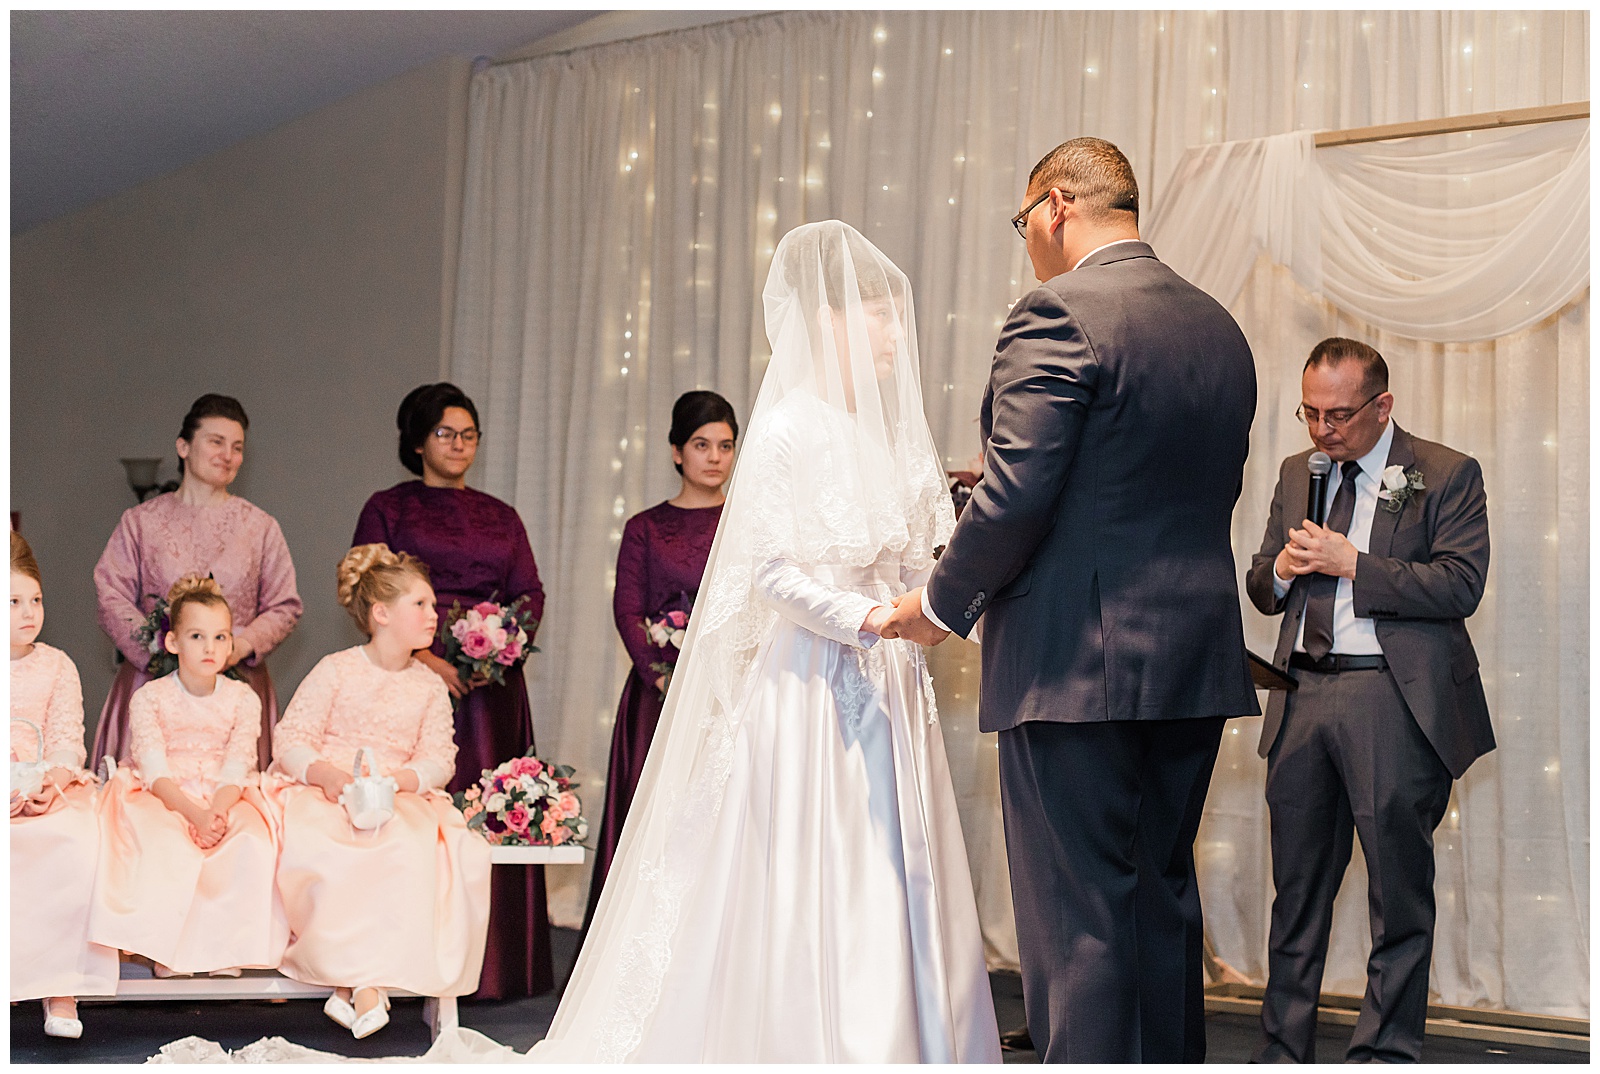 Bride citing vows